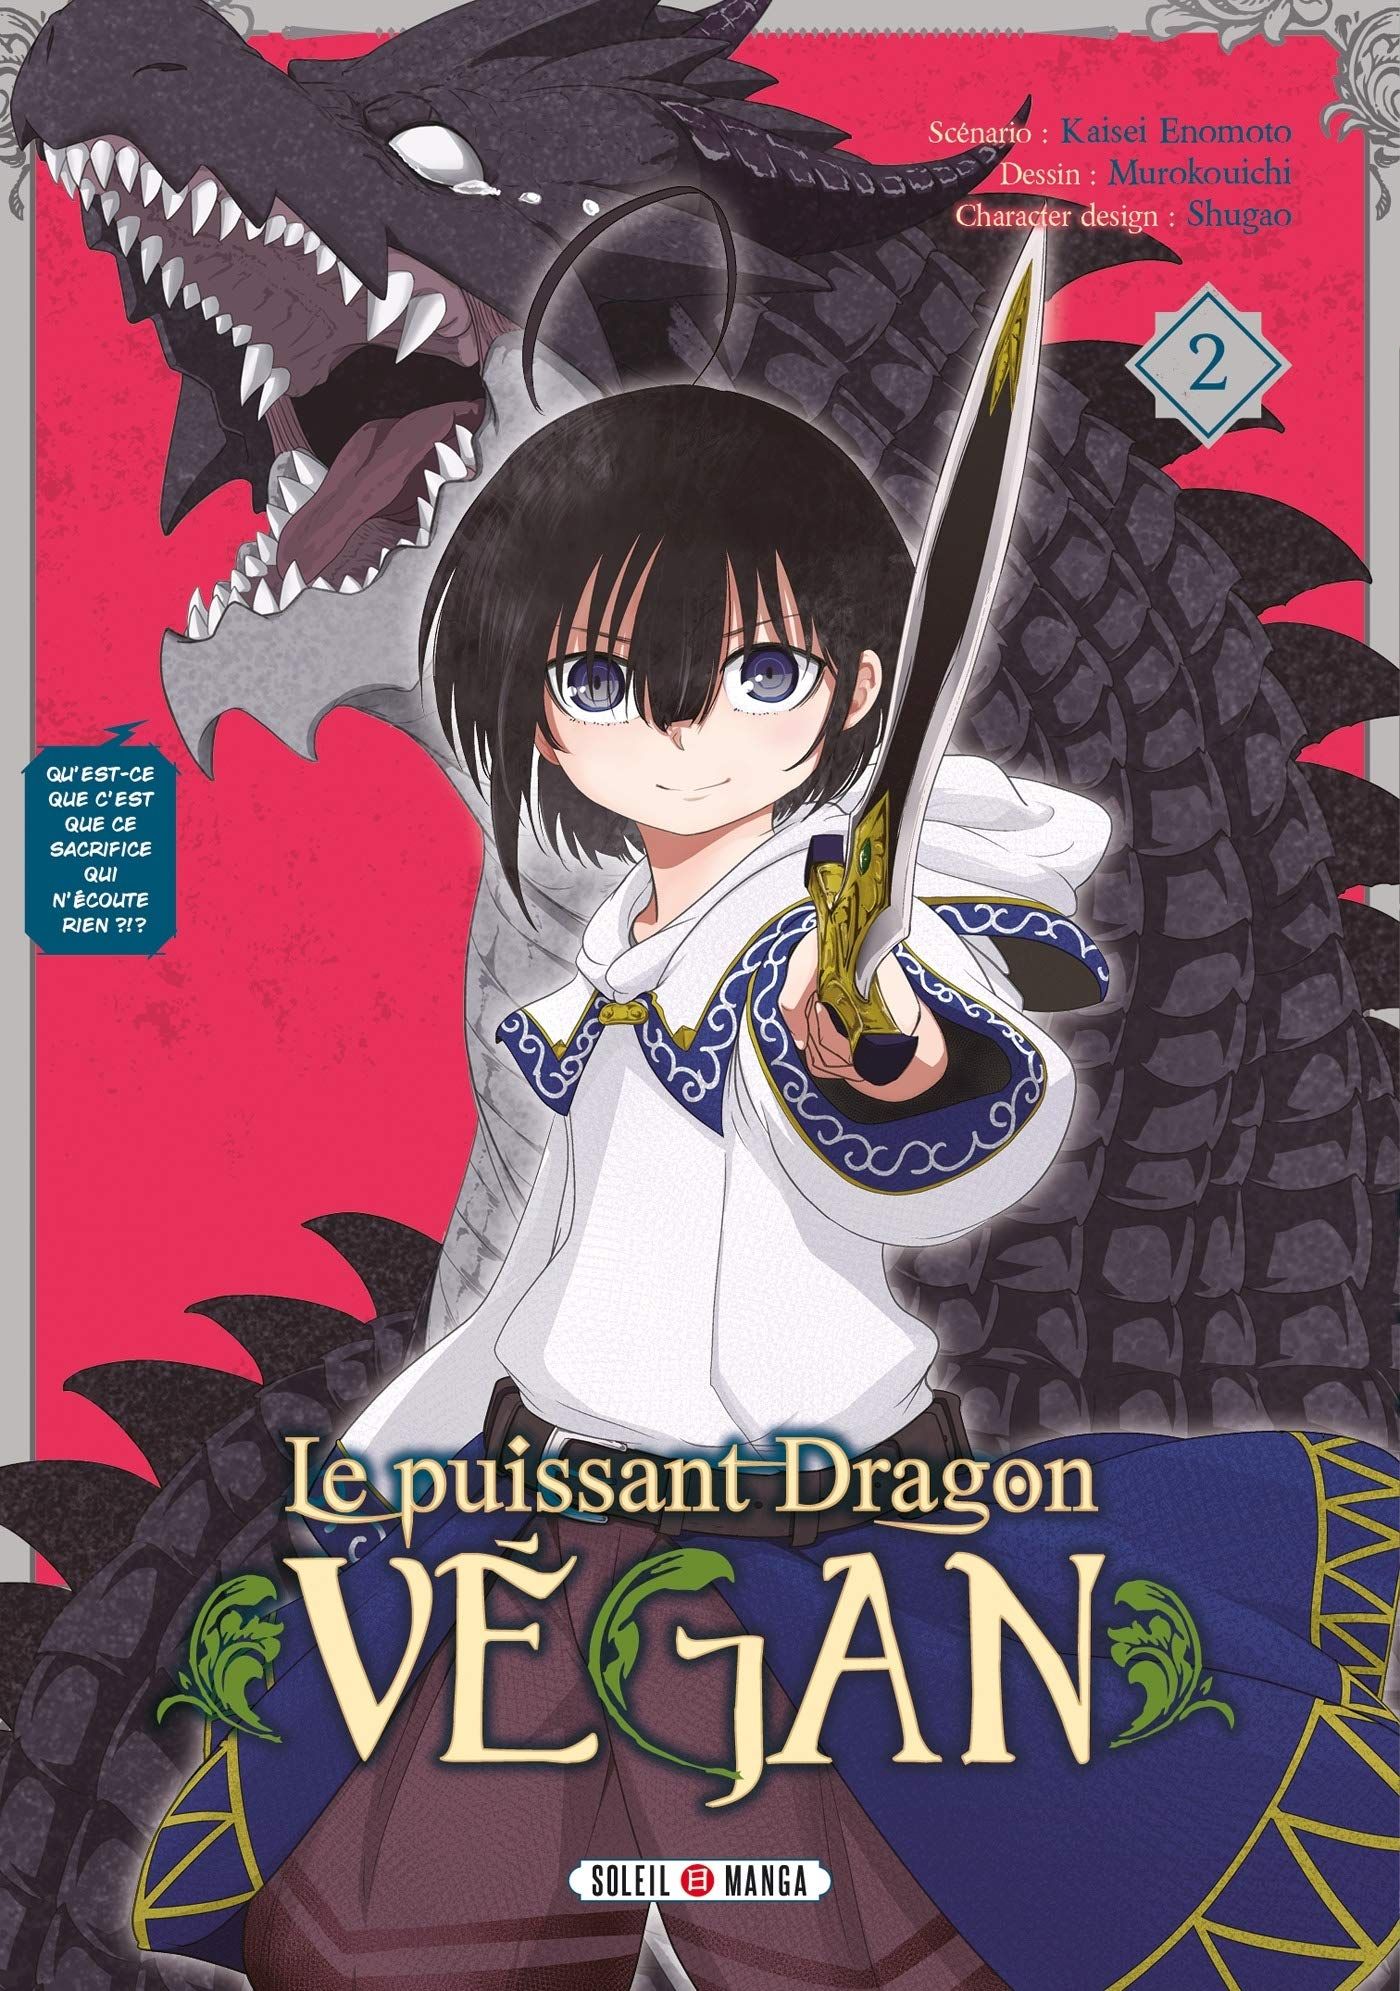 Critique Vol 2 Puissant dragon vegan le Manga Manga news